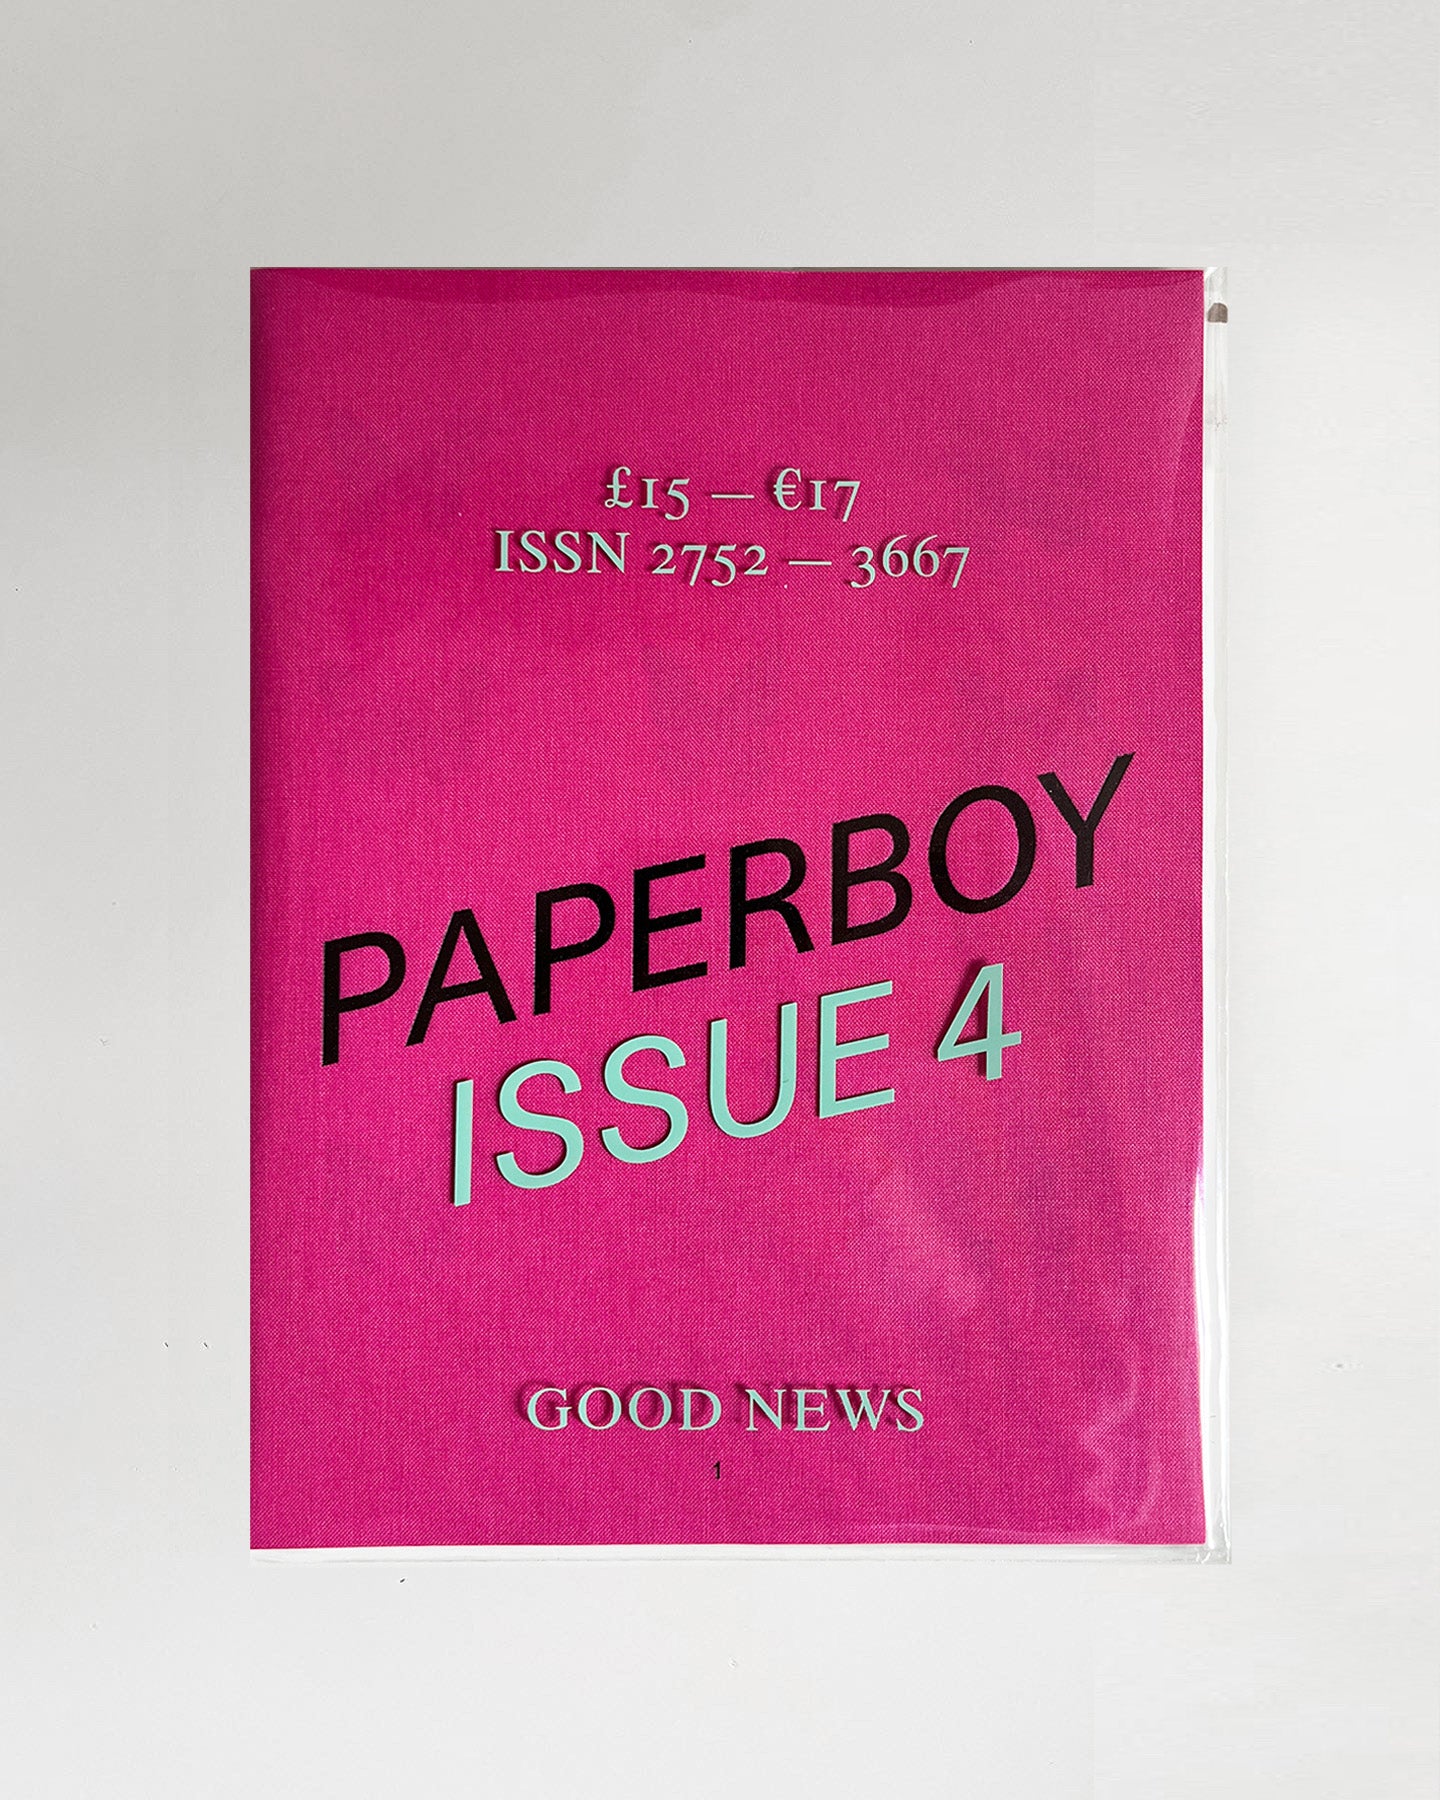 Paperboy Magazine Issue 4